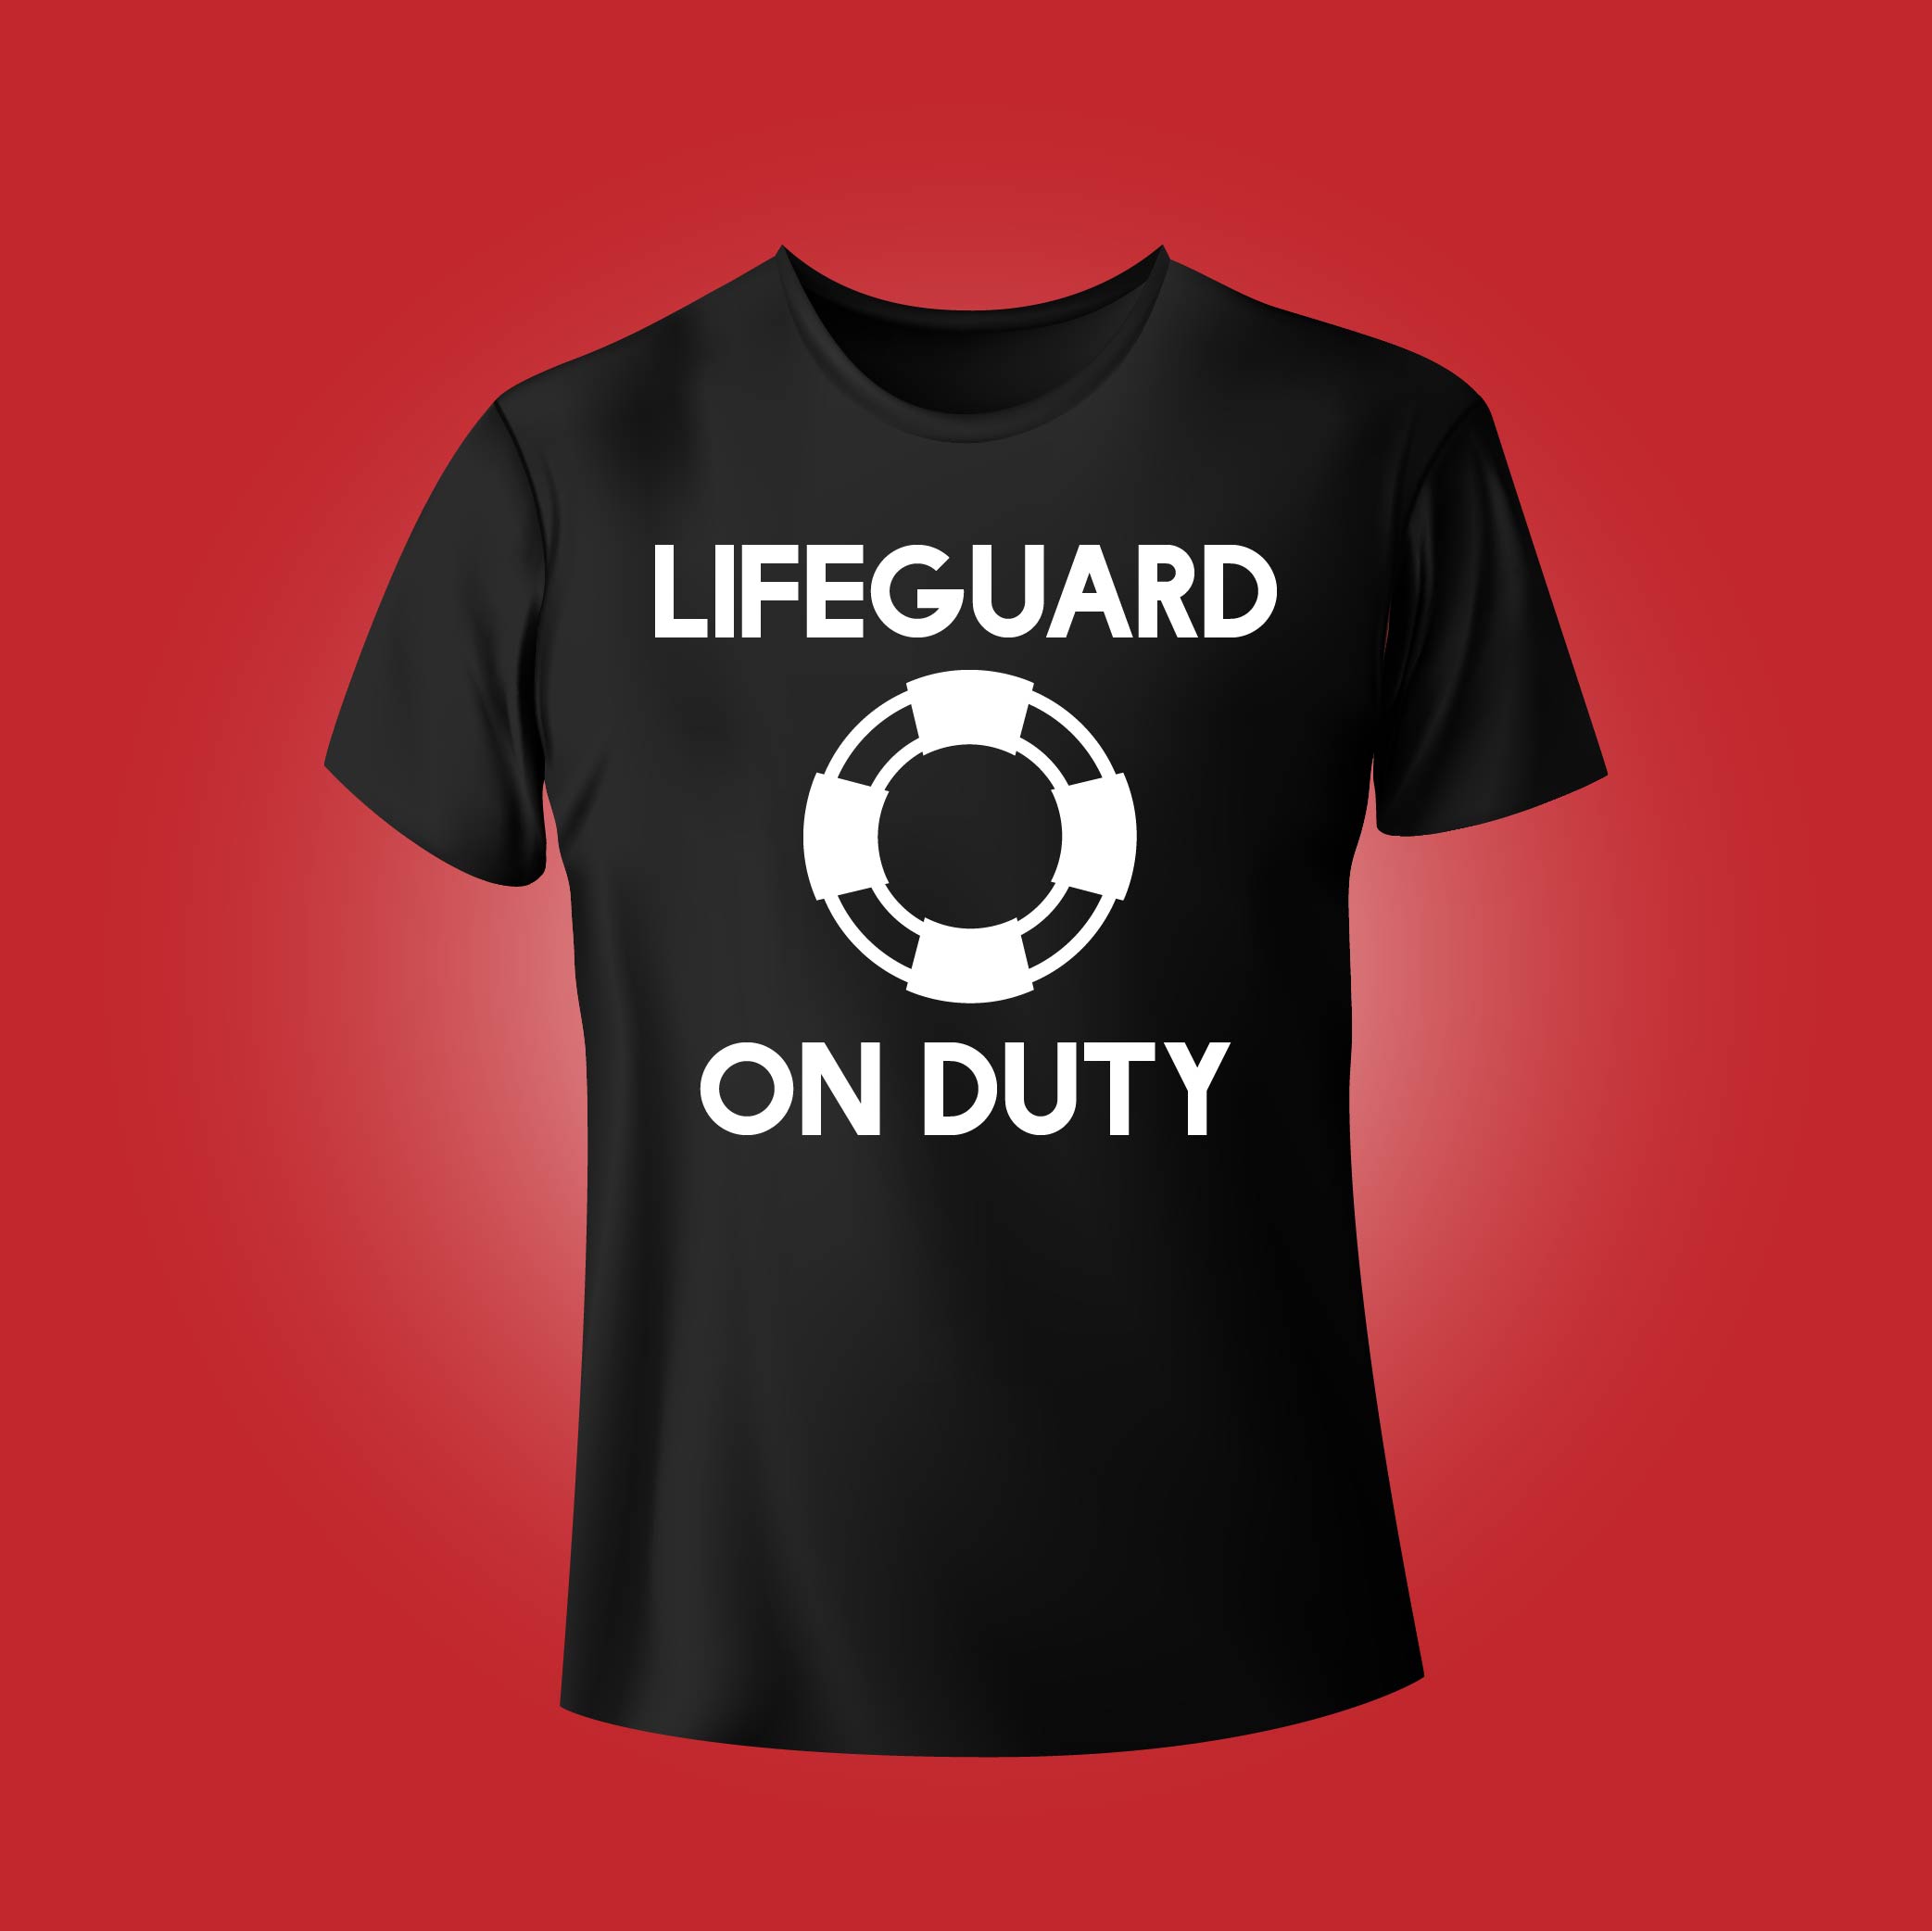 Black t - shirt that says lifeguard on duty.